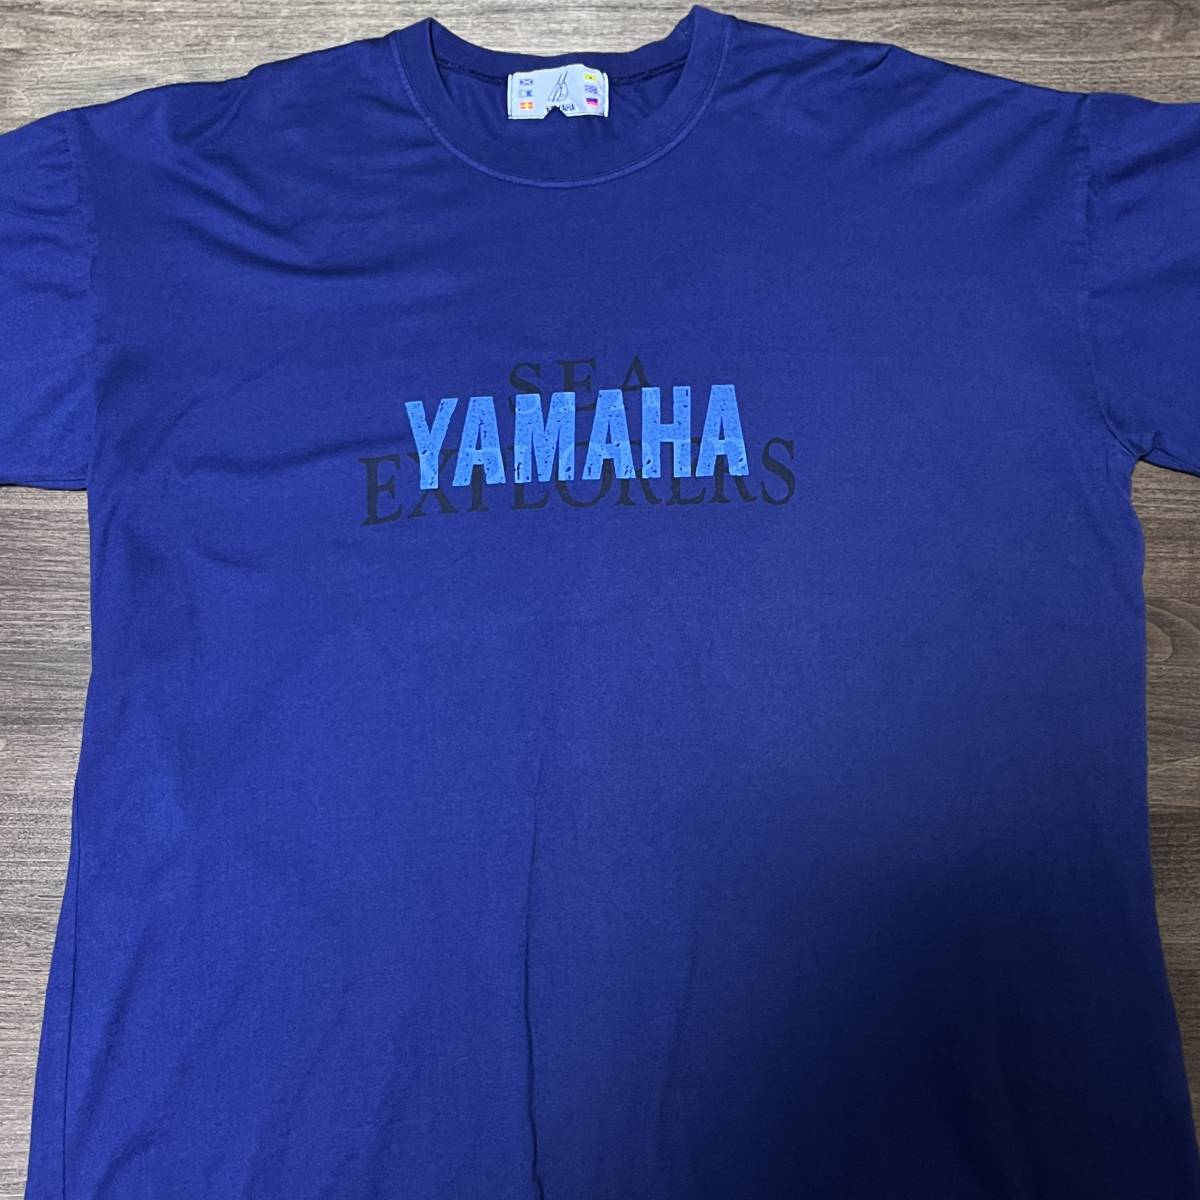  Yamaha engine YAMAHA MORTER Sea Explorers T-shirt 